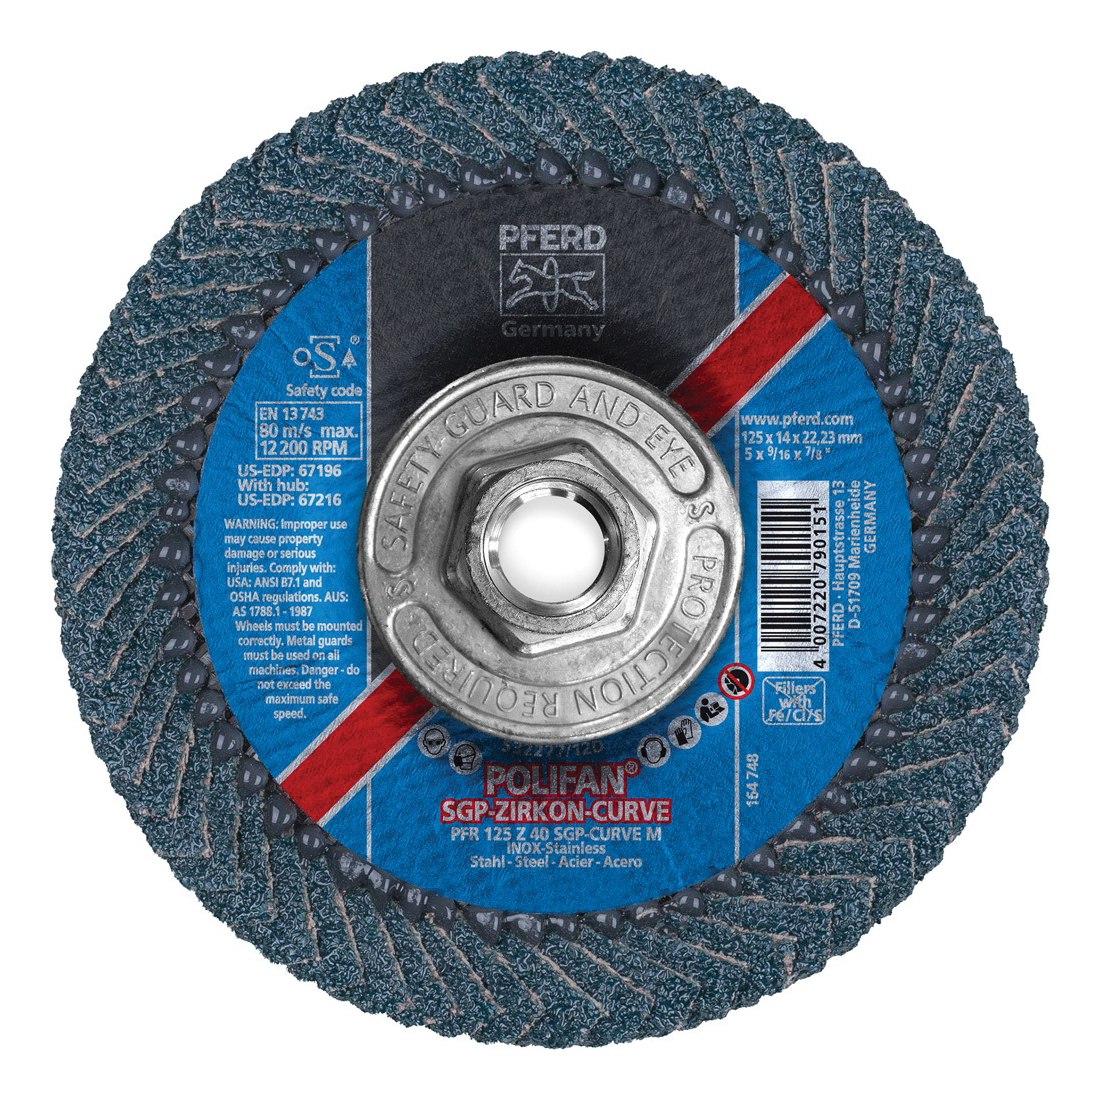 PFERD Polifan® 67216 Special Line SGP Z-CURVE Threaded Coated Abrasive Flap Disc, 5 in Dia, 40 Grit, Zirconia Alumina Abrasive, Type PFR/Radial Disc